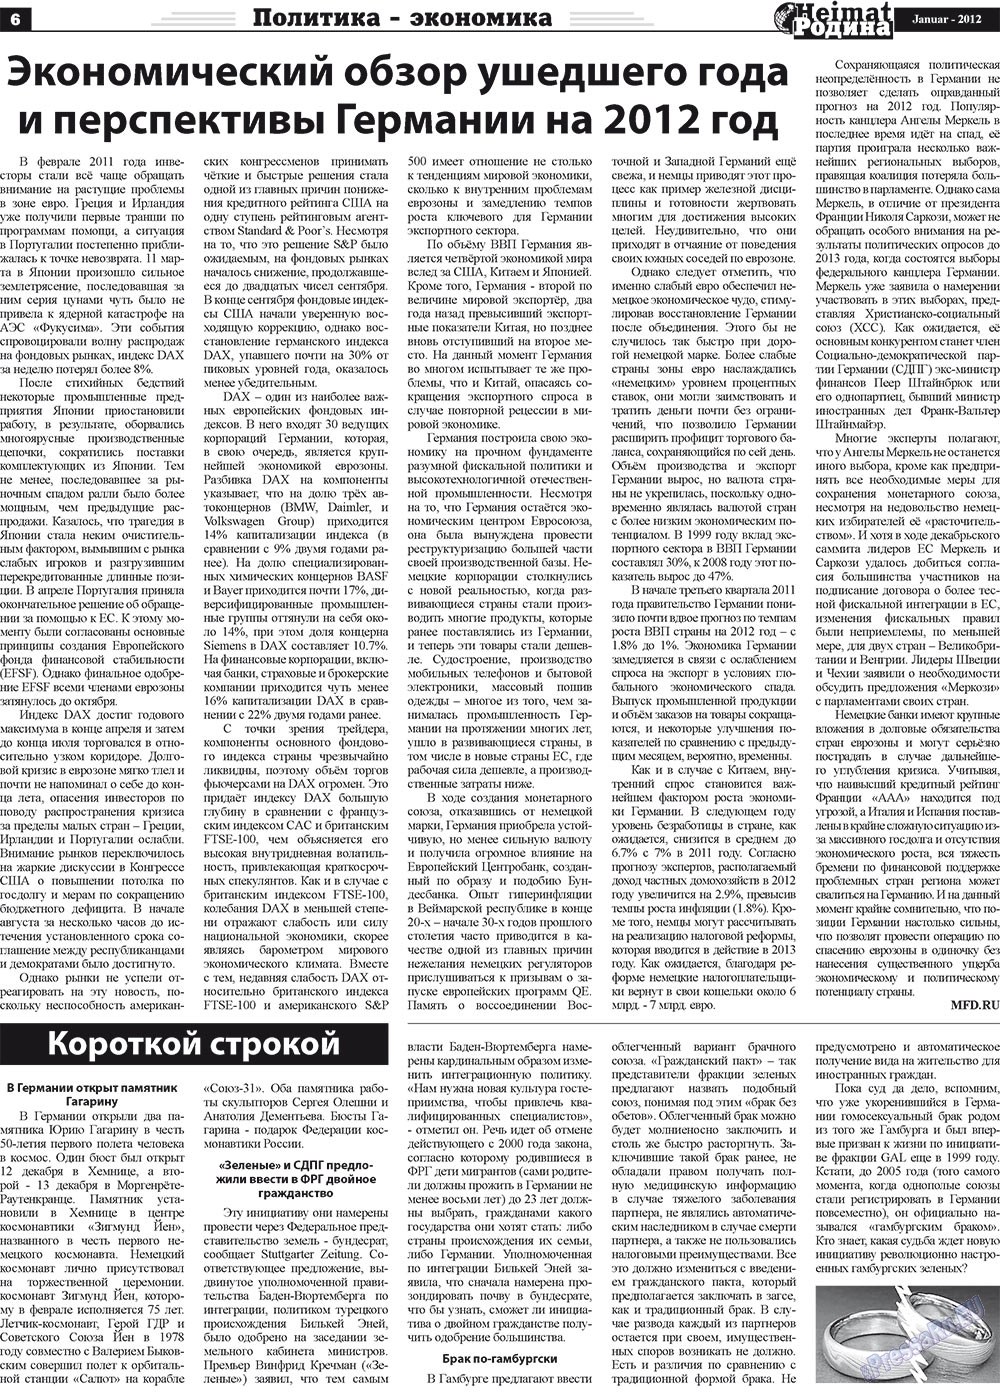 Heimat-Родина, газета. 2012 №1 стр.6